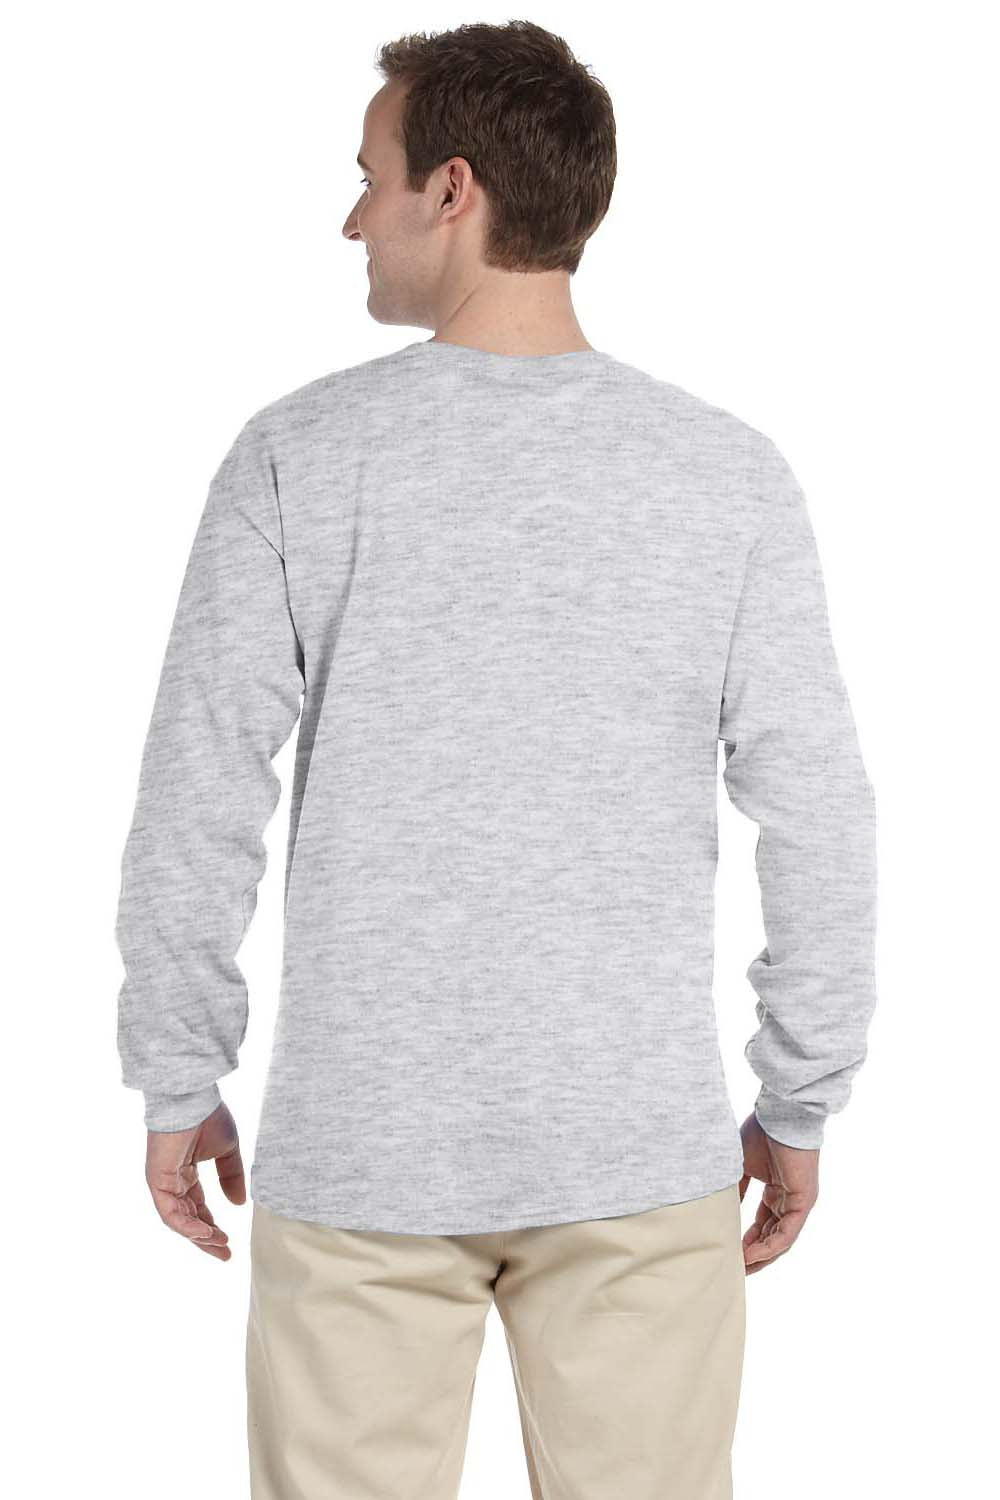 Gildan G240 Mens Ultra Long Sleeve Crewneck T-Shirt Ash Grey Back